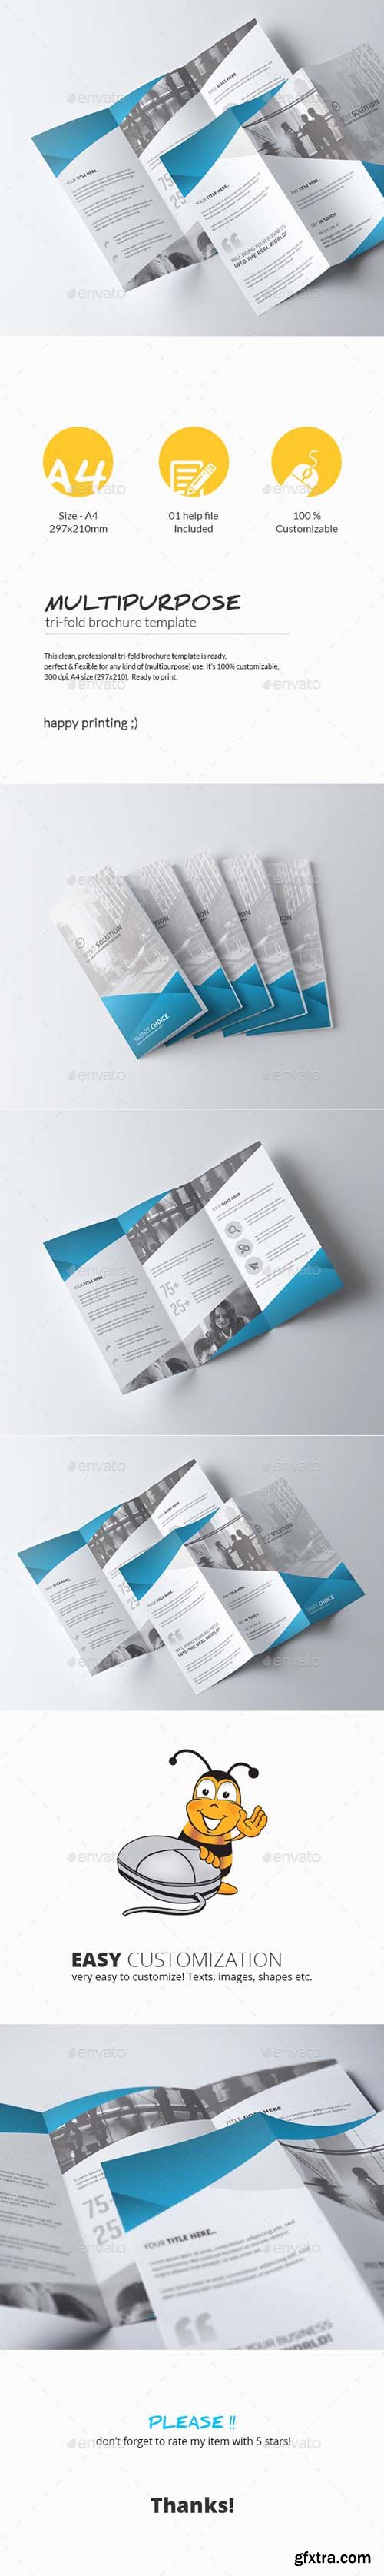 GR - Tri-Fold Brochure - Multipurpose 11242629